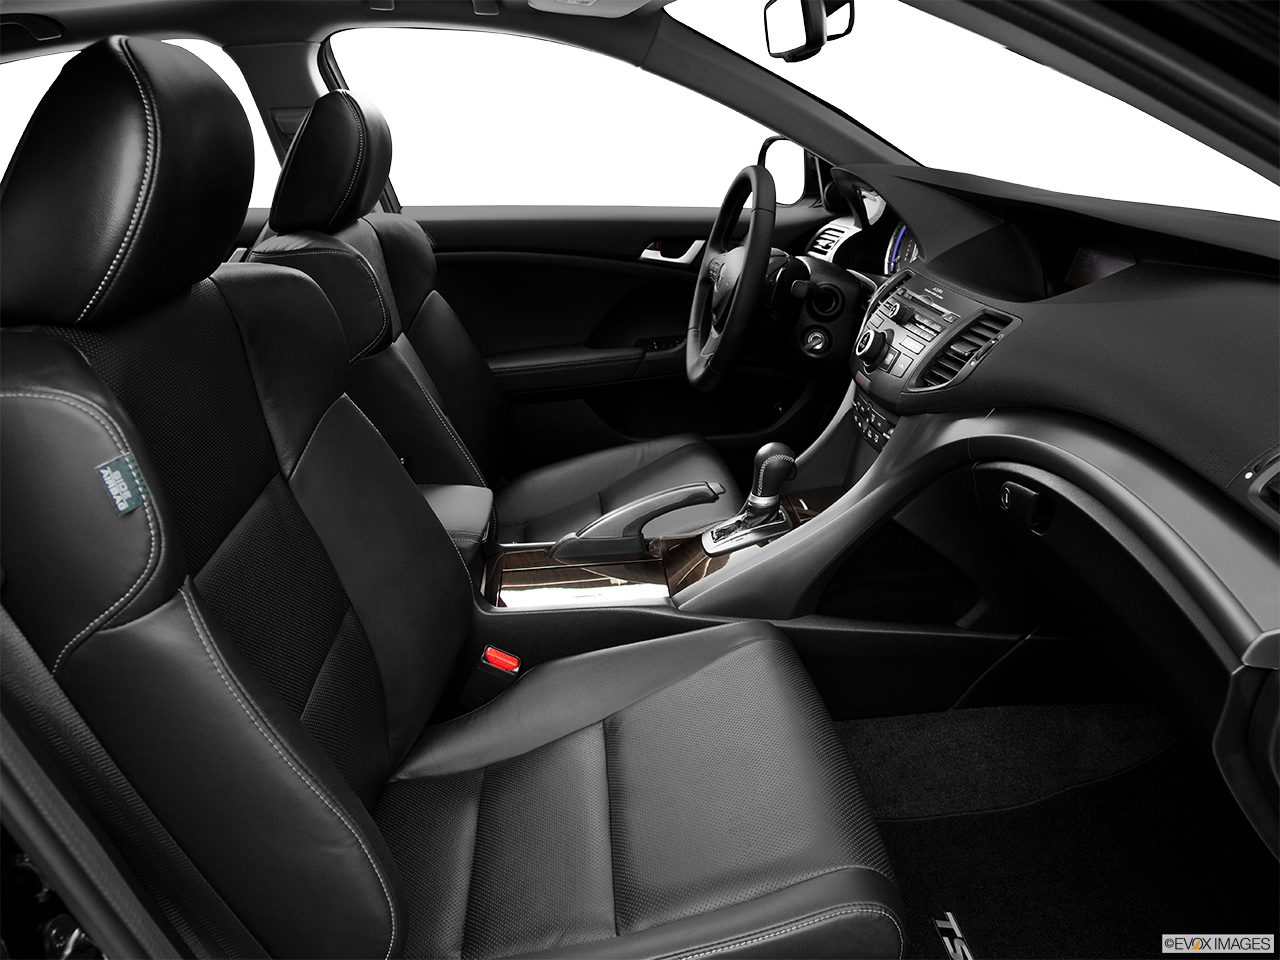 2014 Acura TSX 5-speed Automatic Passenger seat. 